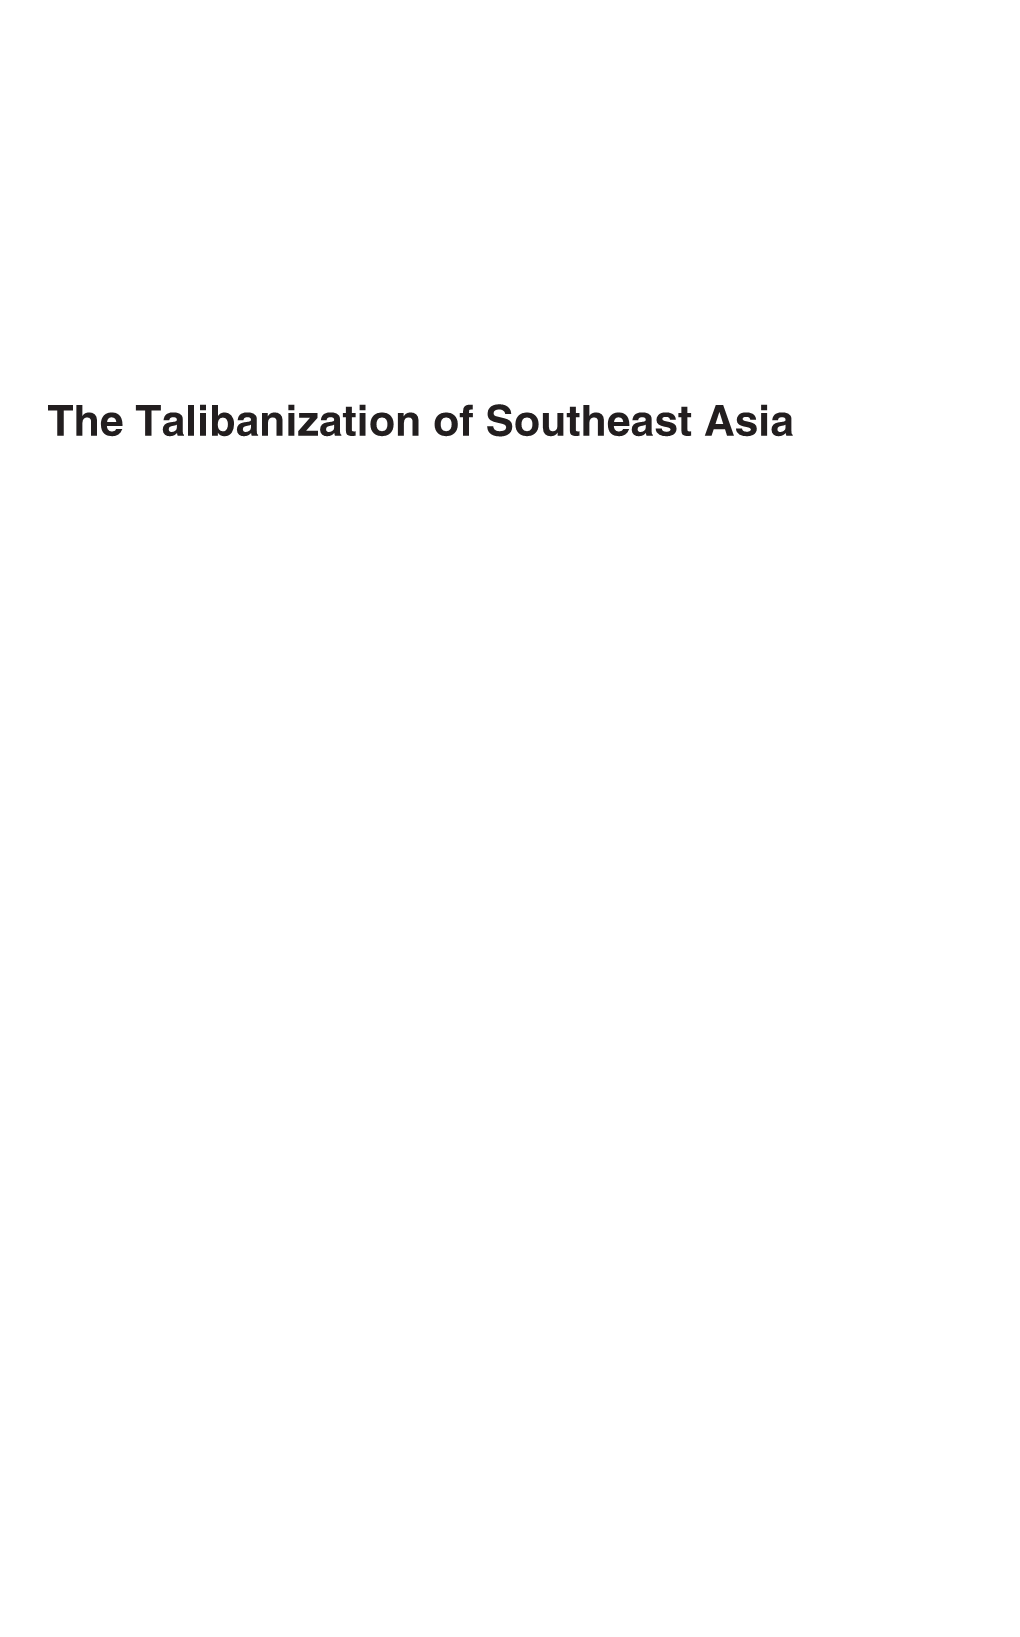 The Talibanization of Southeast Asia Praeger Security International Advisory Board